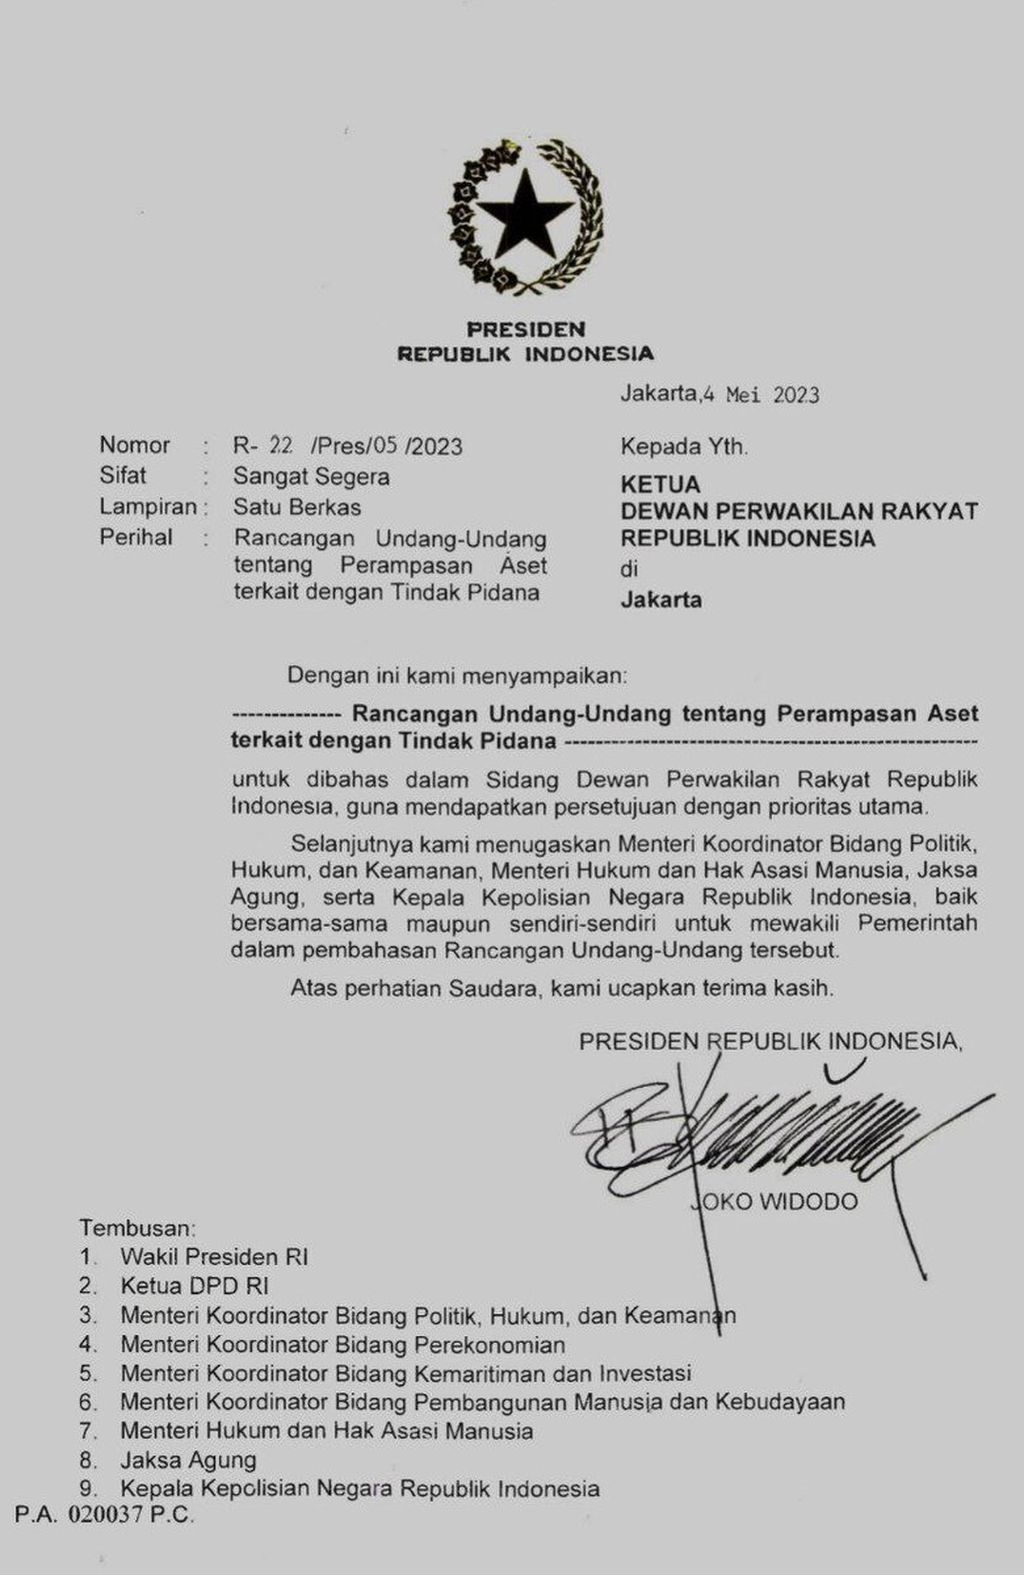 Hasil tangkapan layar surat presiden (surpres) yang dikirimkan pemerintah kepada DPR sebagai permintaan untuk membahas bersama draf Rancangan Undang-undang Perampasan Aset. Surat ditandatangani oleh Presiden Joko Widodo dan dikirimkan ke DPR tertanggal Kamis (4/5/2023).